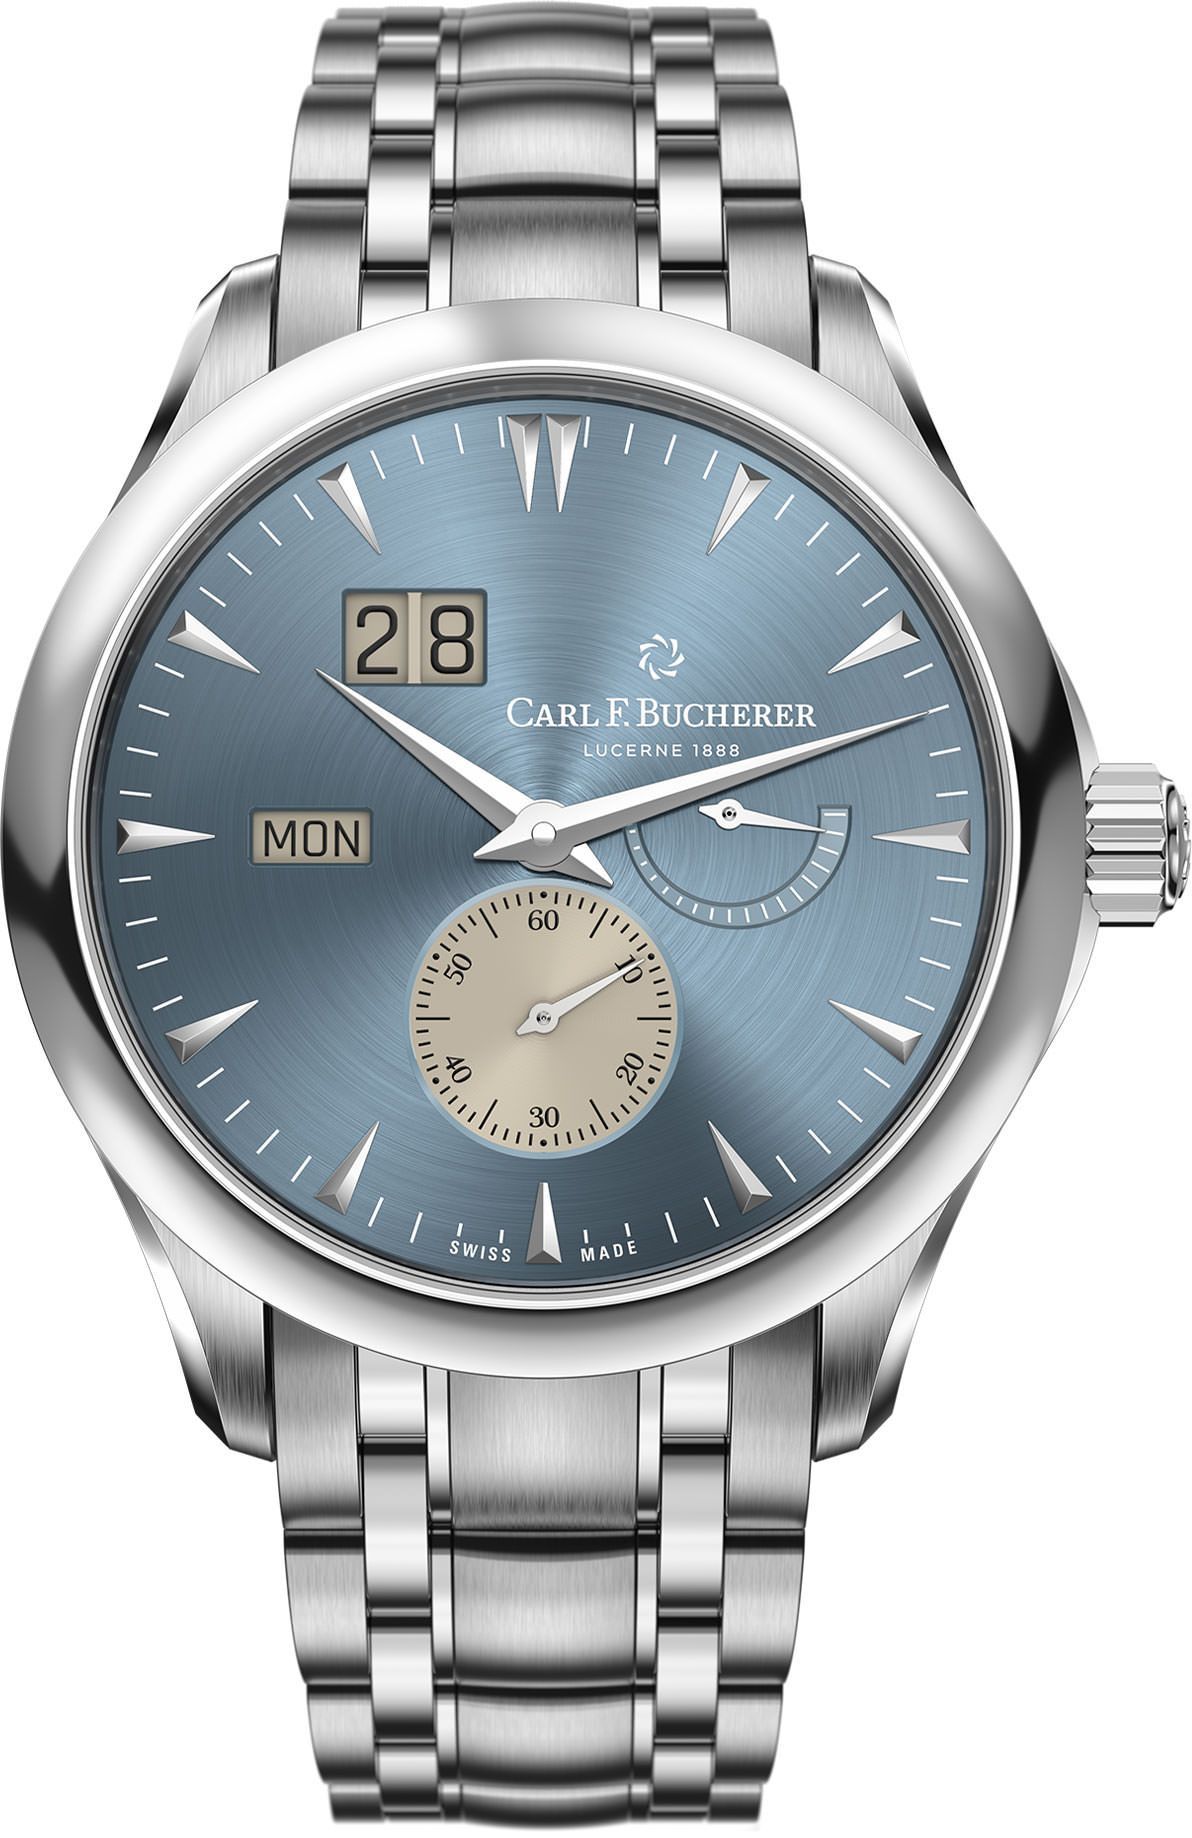 Carl F. Bucherer Manero Peripheral BigDate Blue Dial 42 mm Automatic Watch For Men - 1